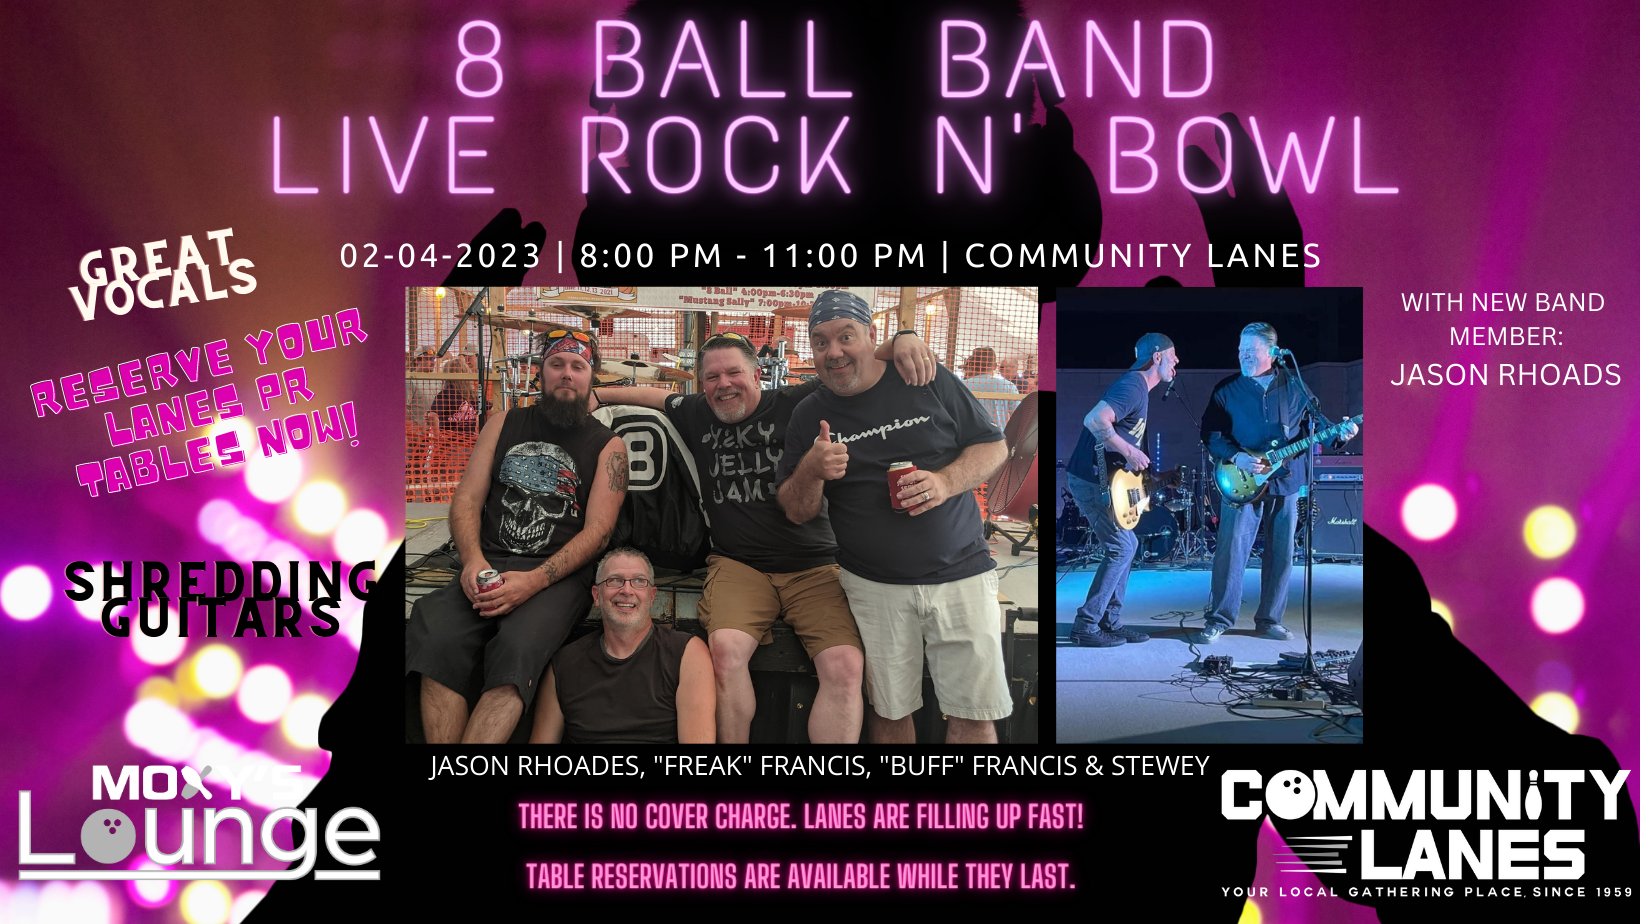 8 ball live rock BOWL